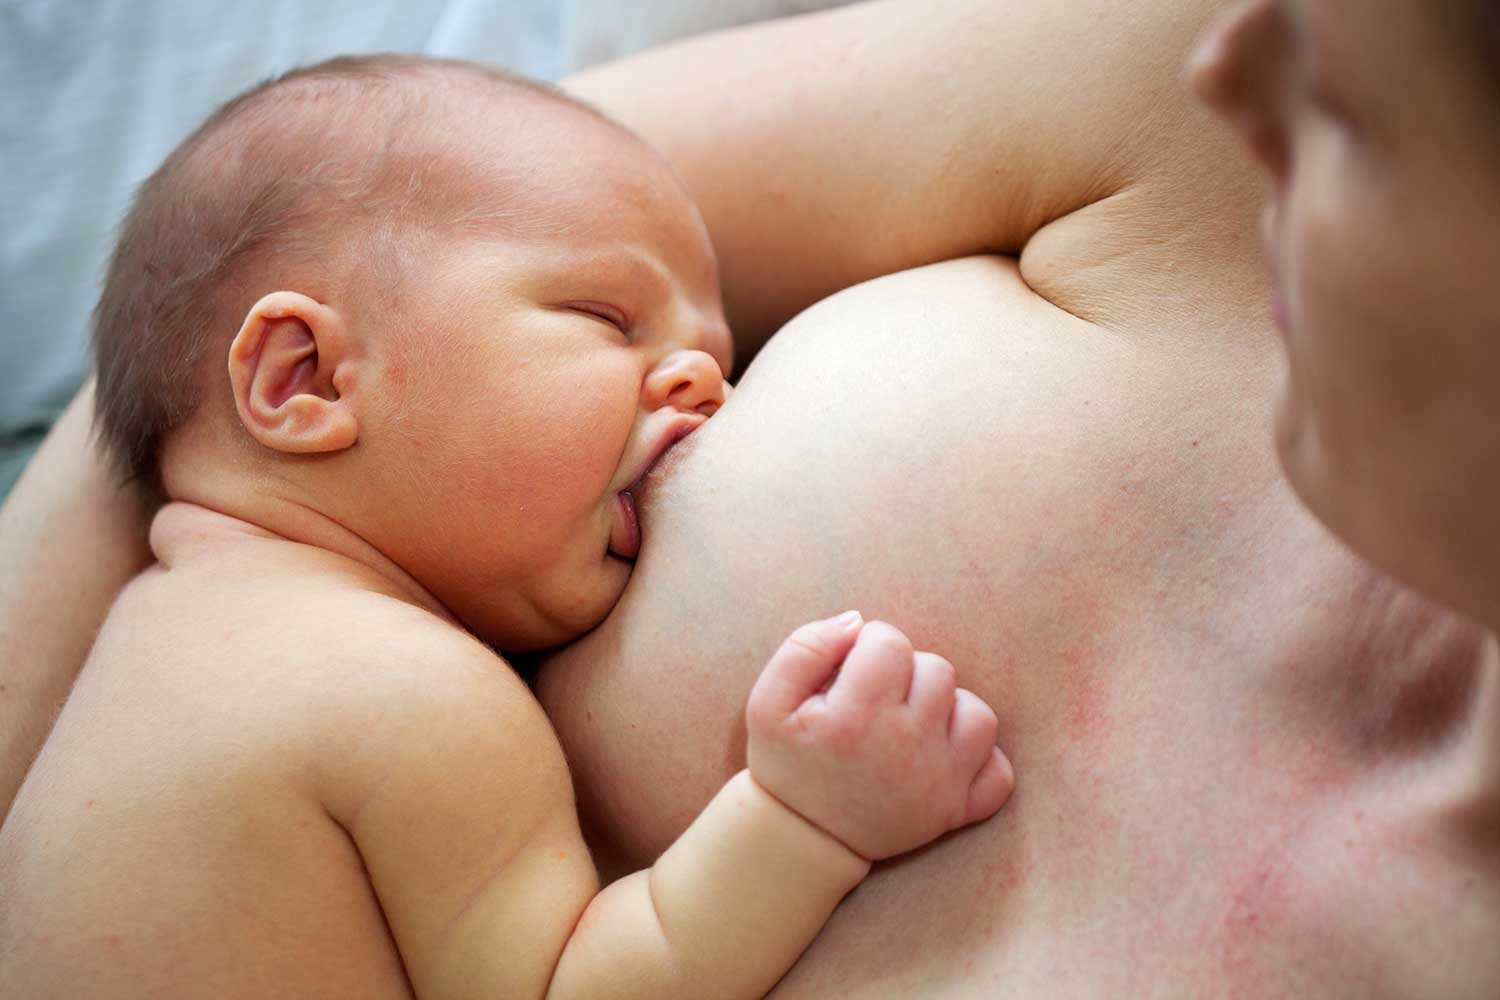 woman nurses her baby